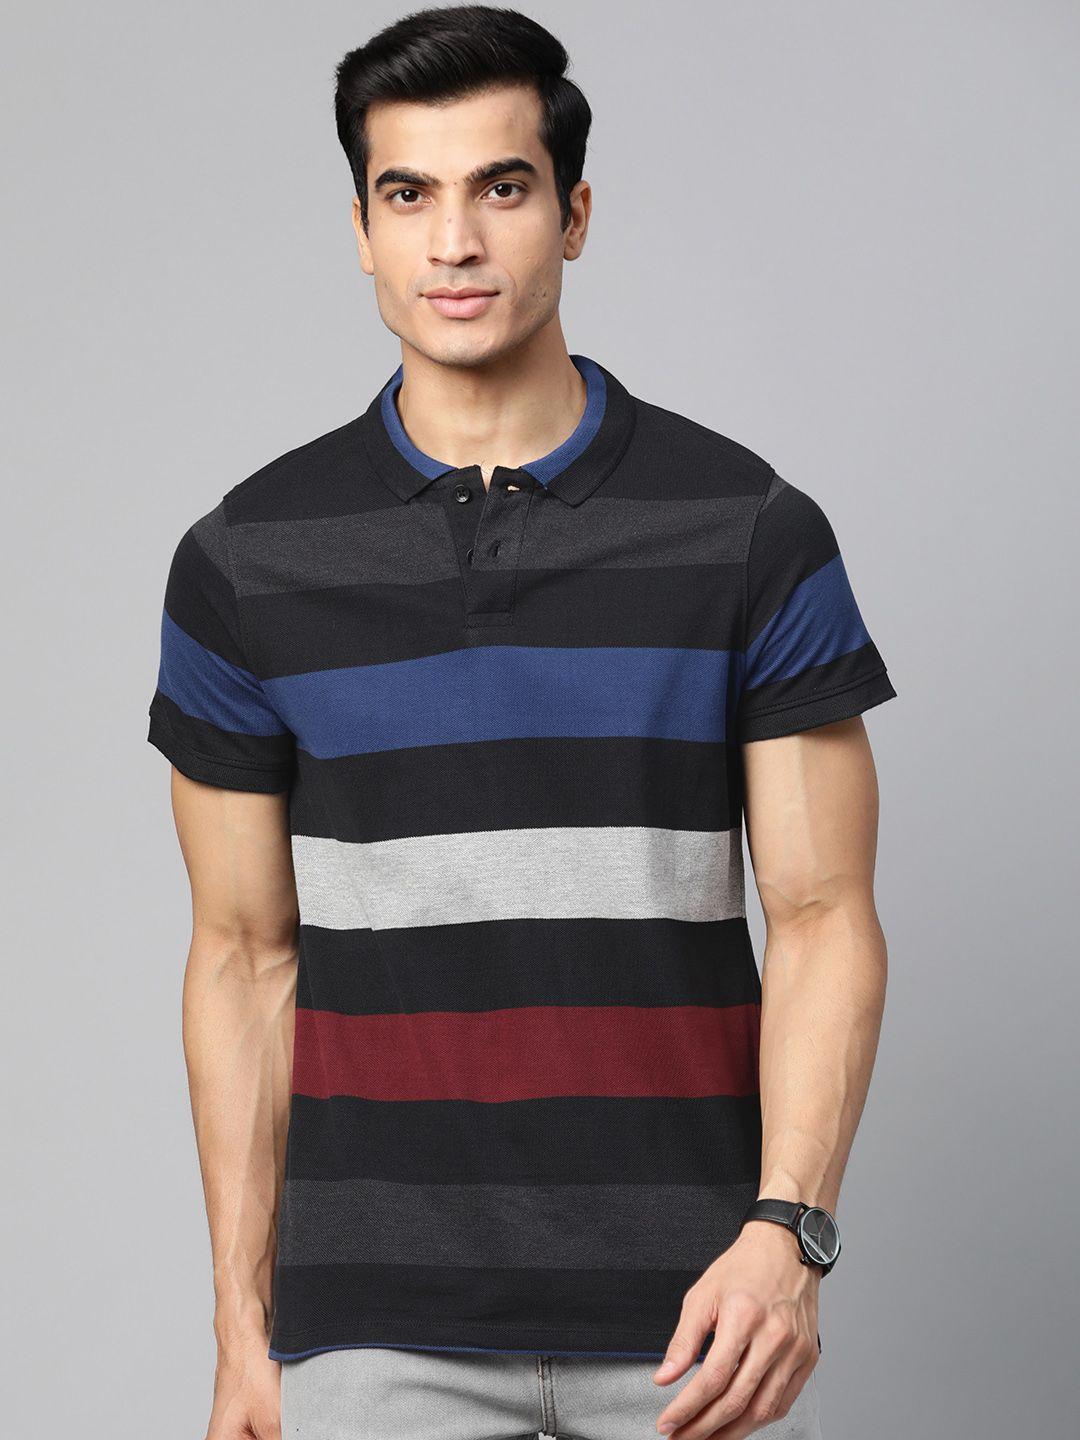 the roadster lifestyle co men black & grey multi striped polo collar t-shirt